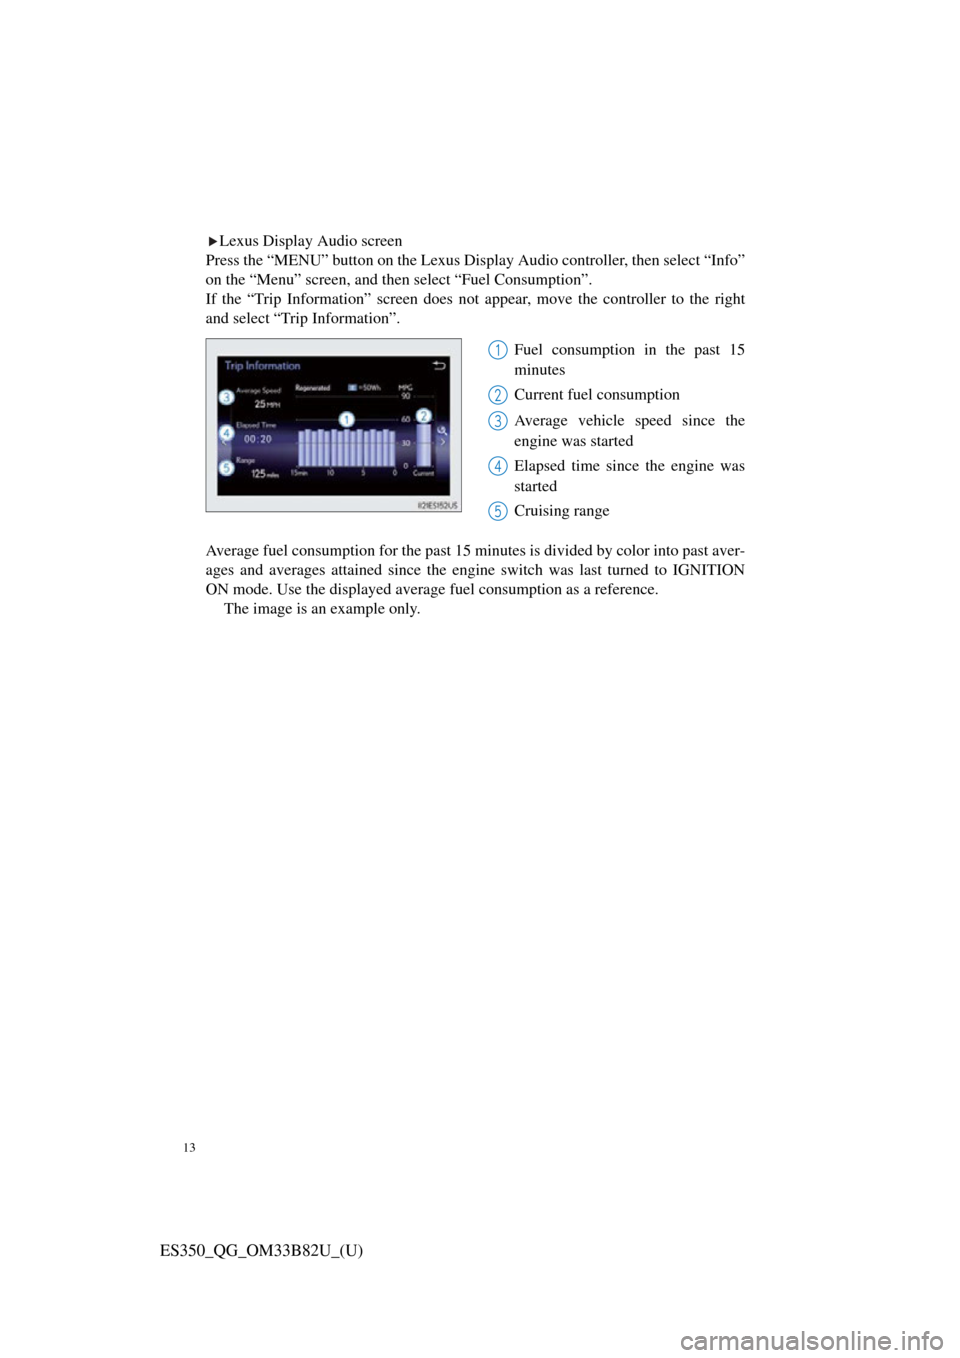 Lexus ES350 2016  Quick Guide / LEXUS 2016 ES350  QUICK GUIDE (OM33B82U) User Guide 13
ES350_QG_OM33B82U_(U)
Lexus Display Audio screen
Press the “MENU” button on the Lexus Display Audio controller, then select “Info”
on the “Menu” screen, and then  select “Fuel Consump